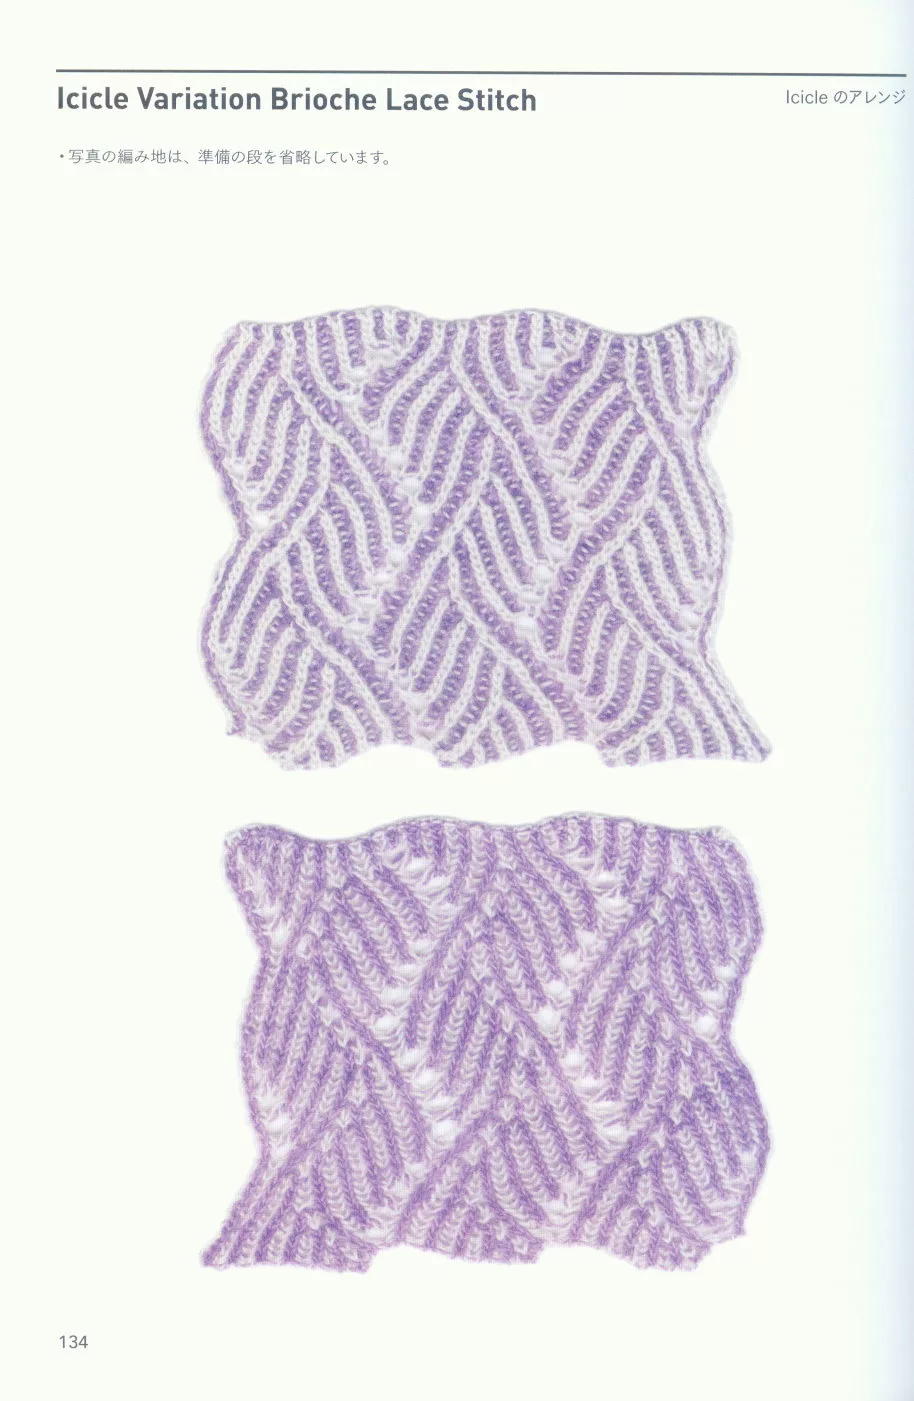 Icicle Variation Brioche Lace Stitch